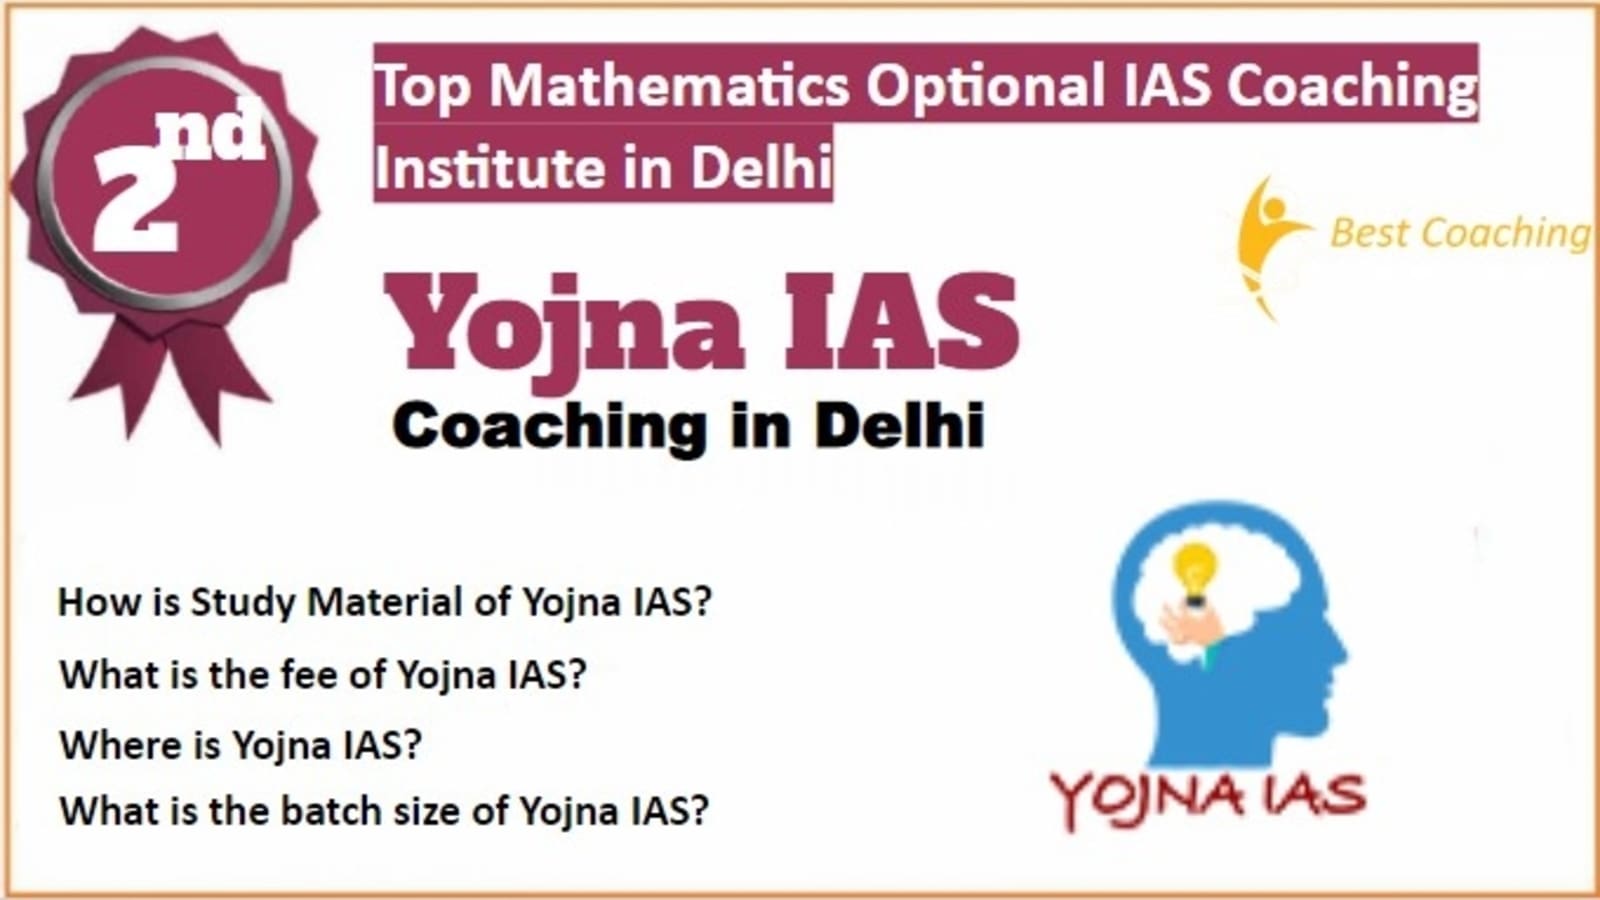 Rank 2 Best Mathematics Optional IAS Coaching in Delhi